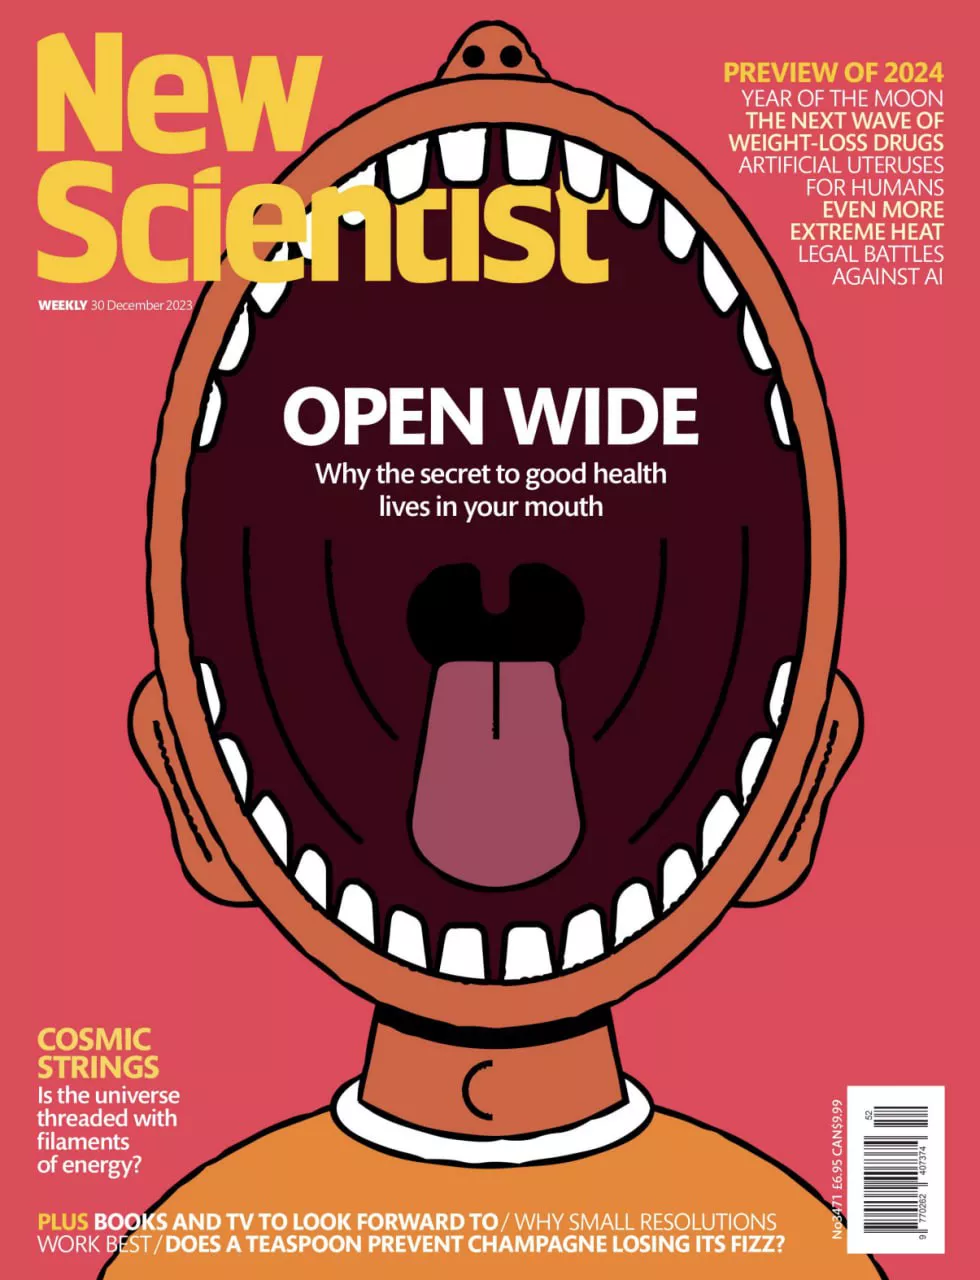 New Scientist - 30 December 2023 (science)